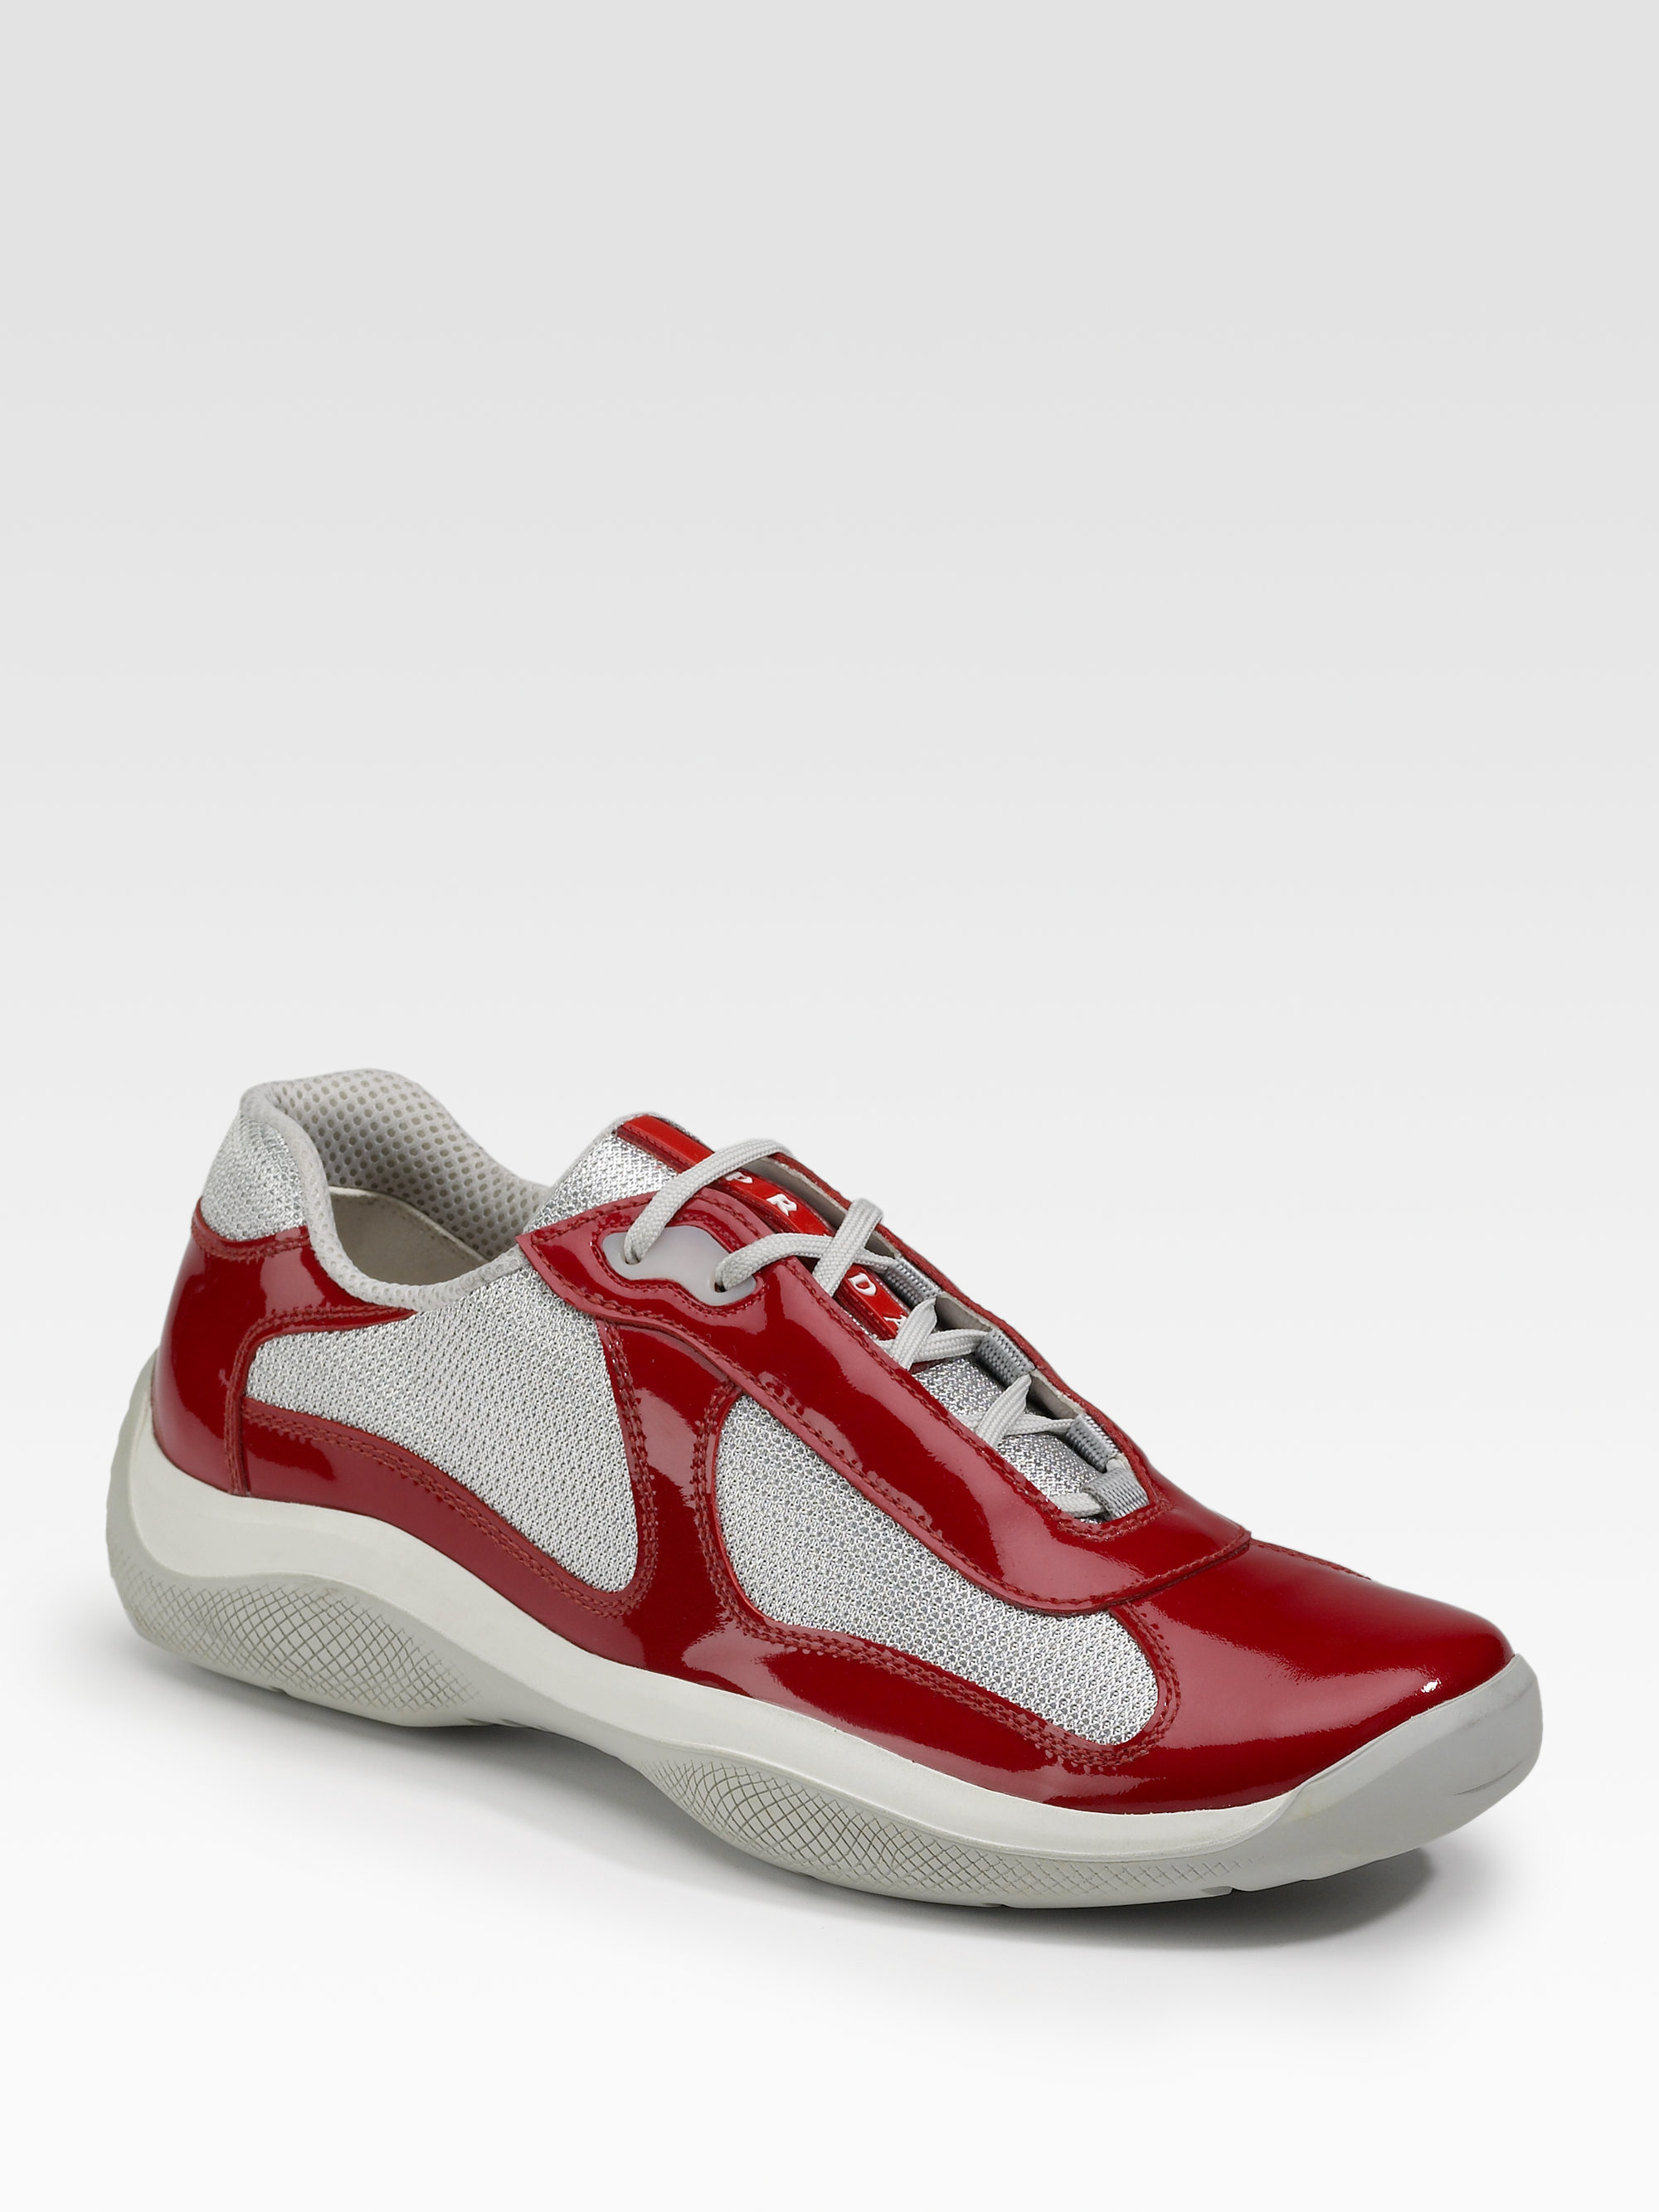 Prada Patent Sneakers in Cherry Red 